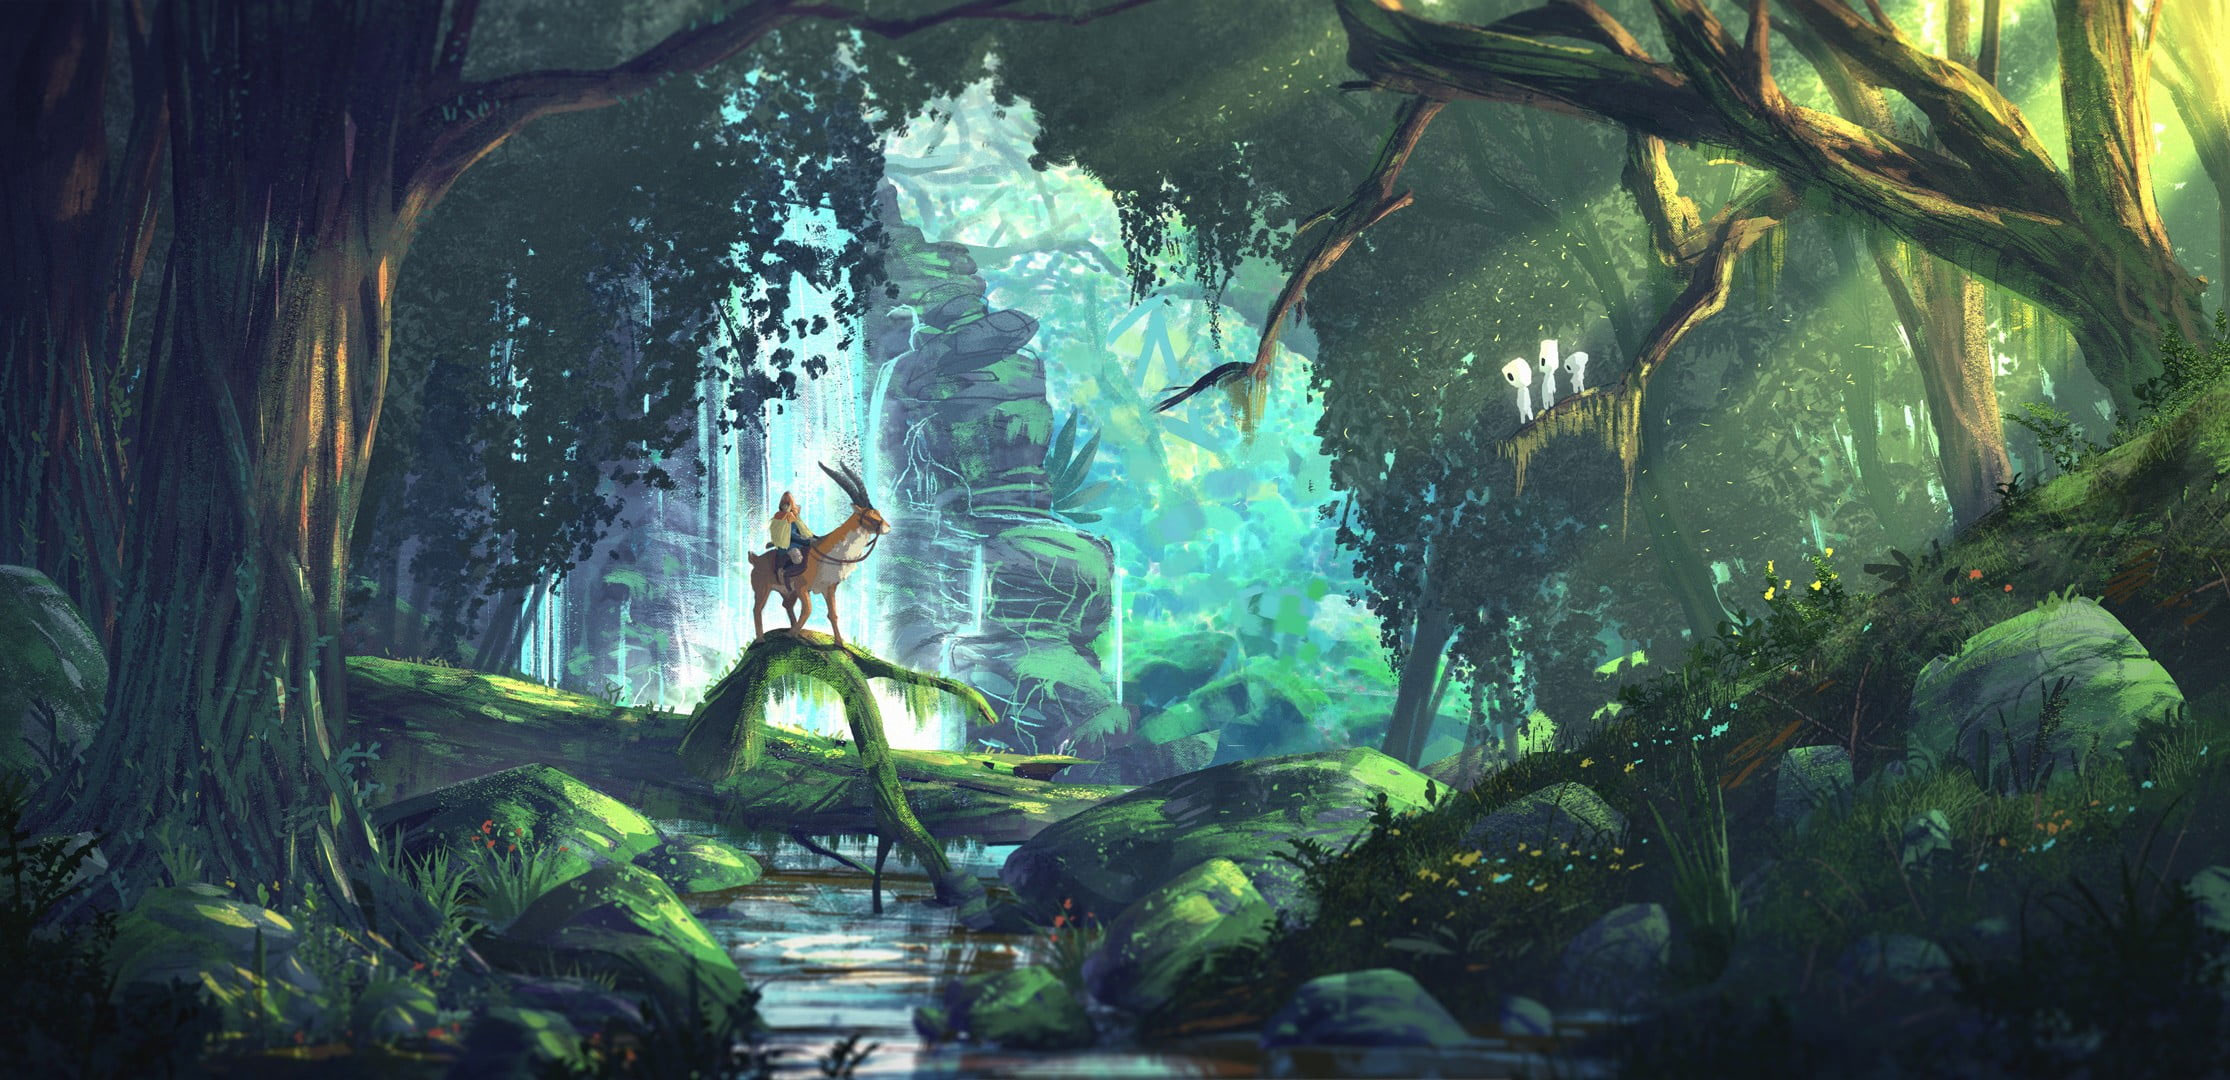 Fantasy Art Wallpaper, Anime, Forest, Princess Mononoke - Wallpaperforu